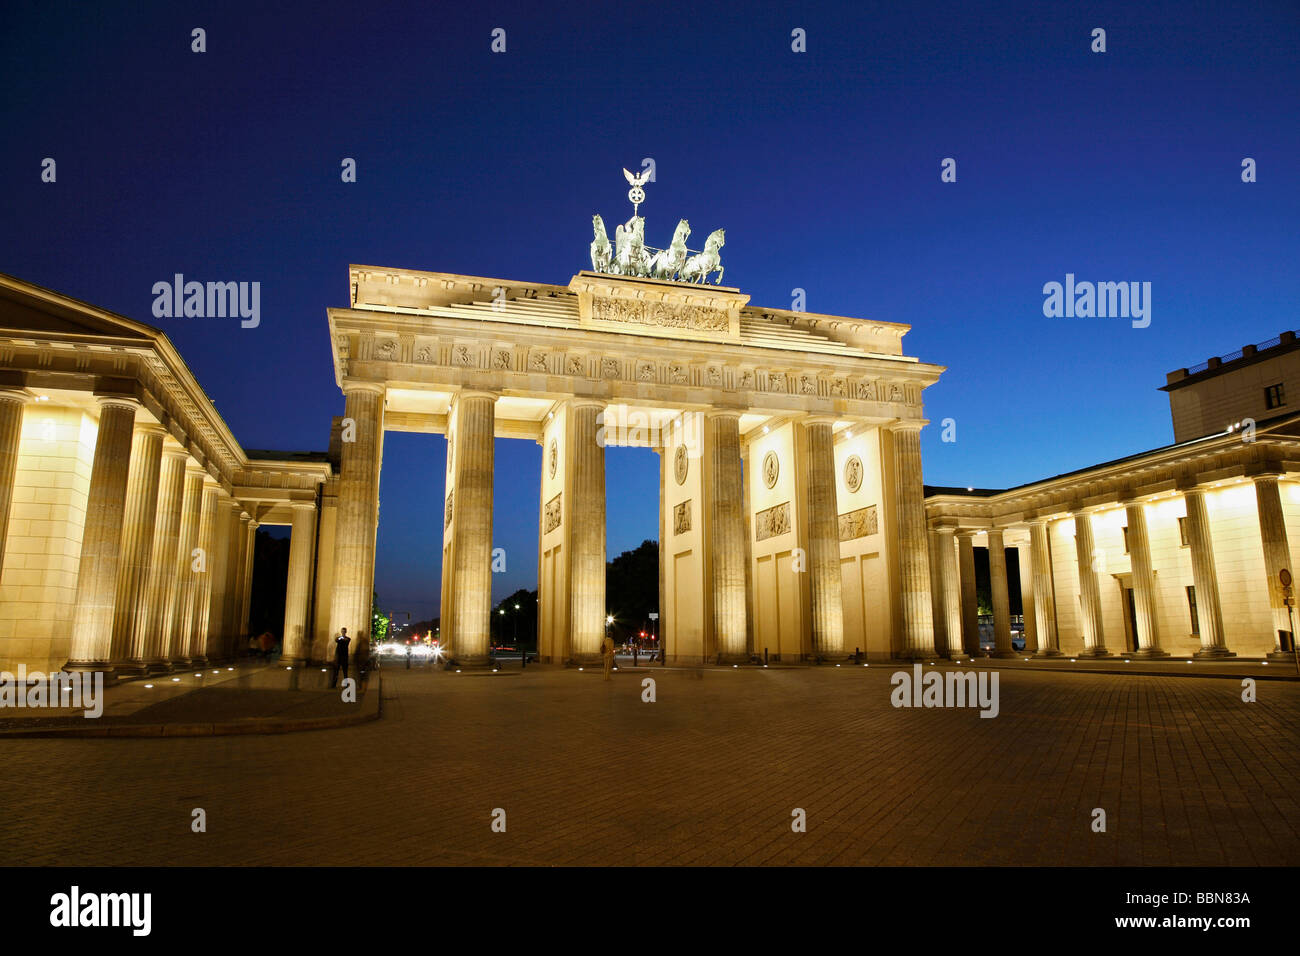 Pariser Platz square, the Brandenburg Gate in the evening in Berlin, Germany, Europe Stock Photo